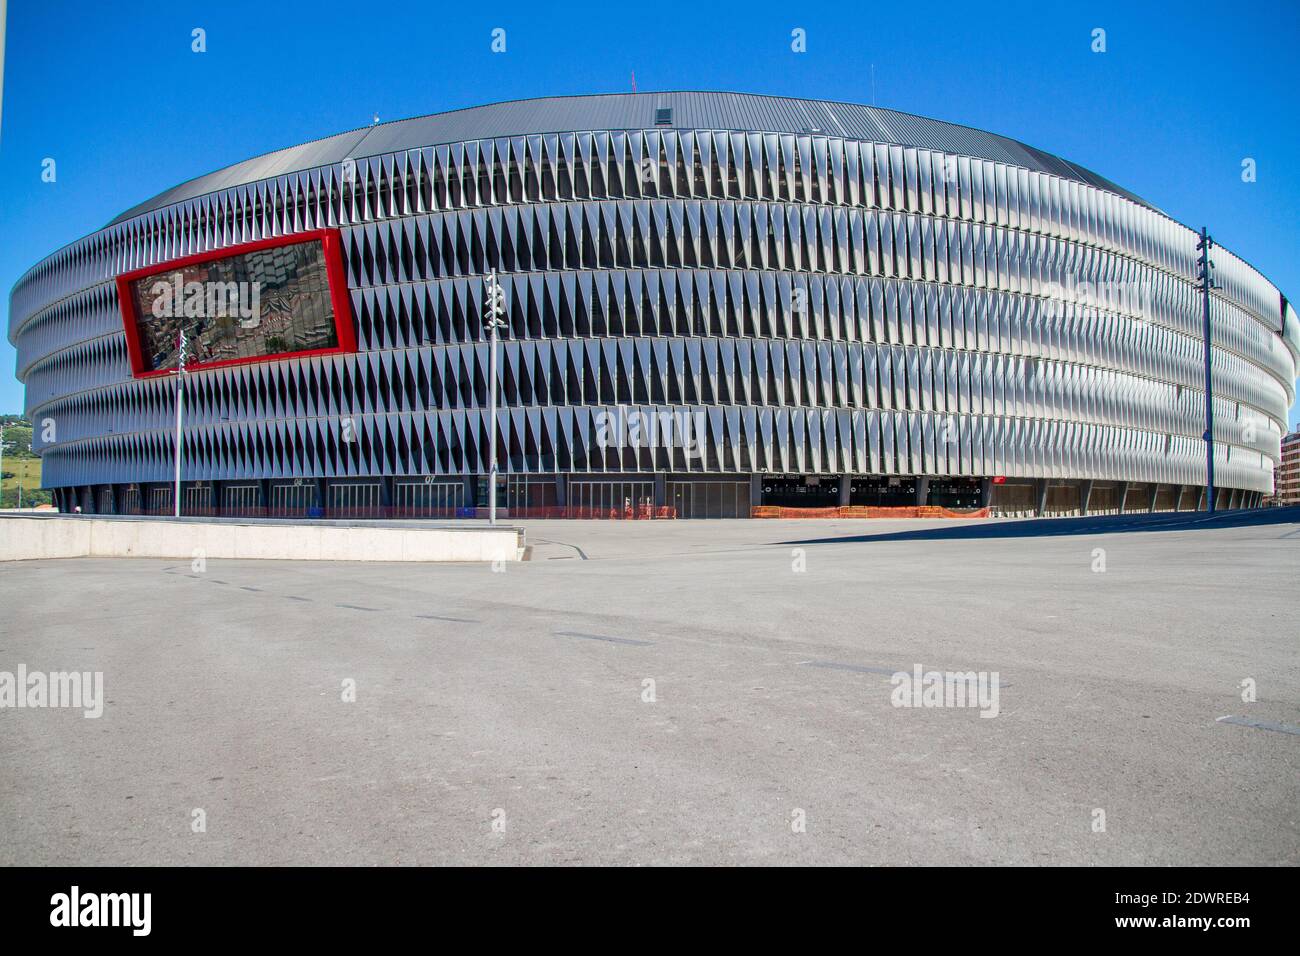 Europe Spain Athletic Club Bilbao The San Mames Stadium San Mames Is A Football Stadium Located In Bilbao Spain Stock Photo Alamy